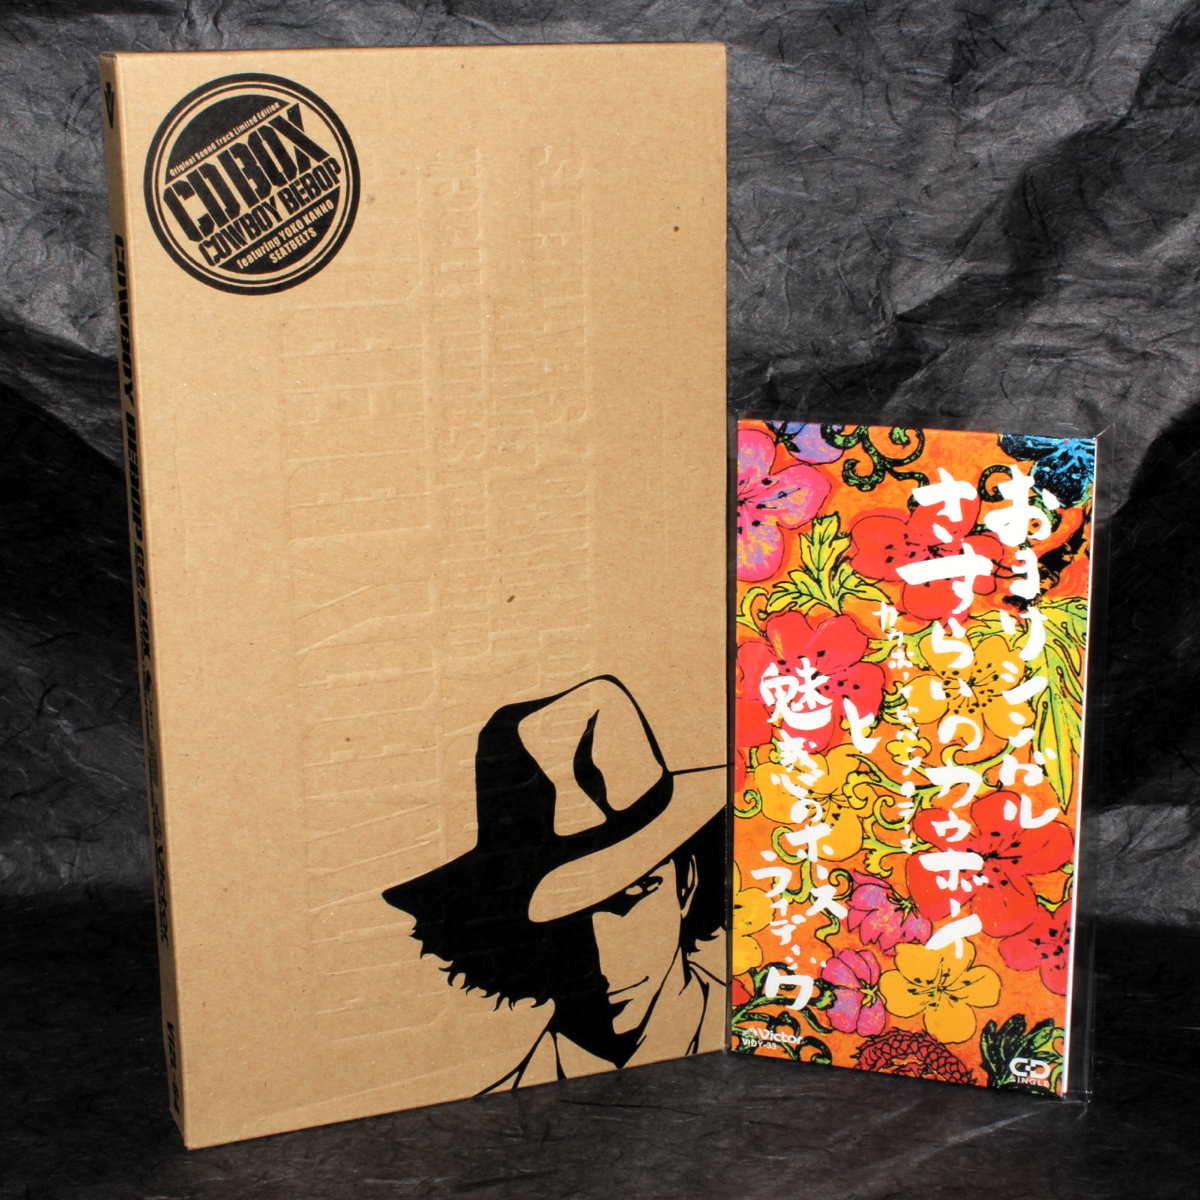 Cowboy Bebop CD Box - Limited Edition